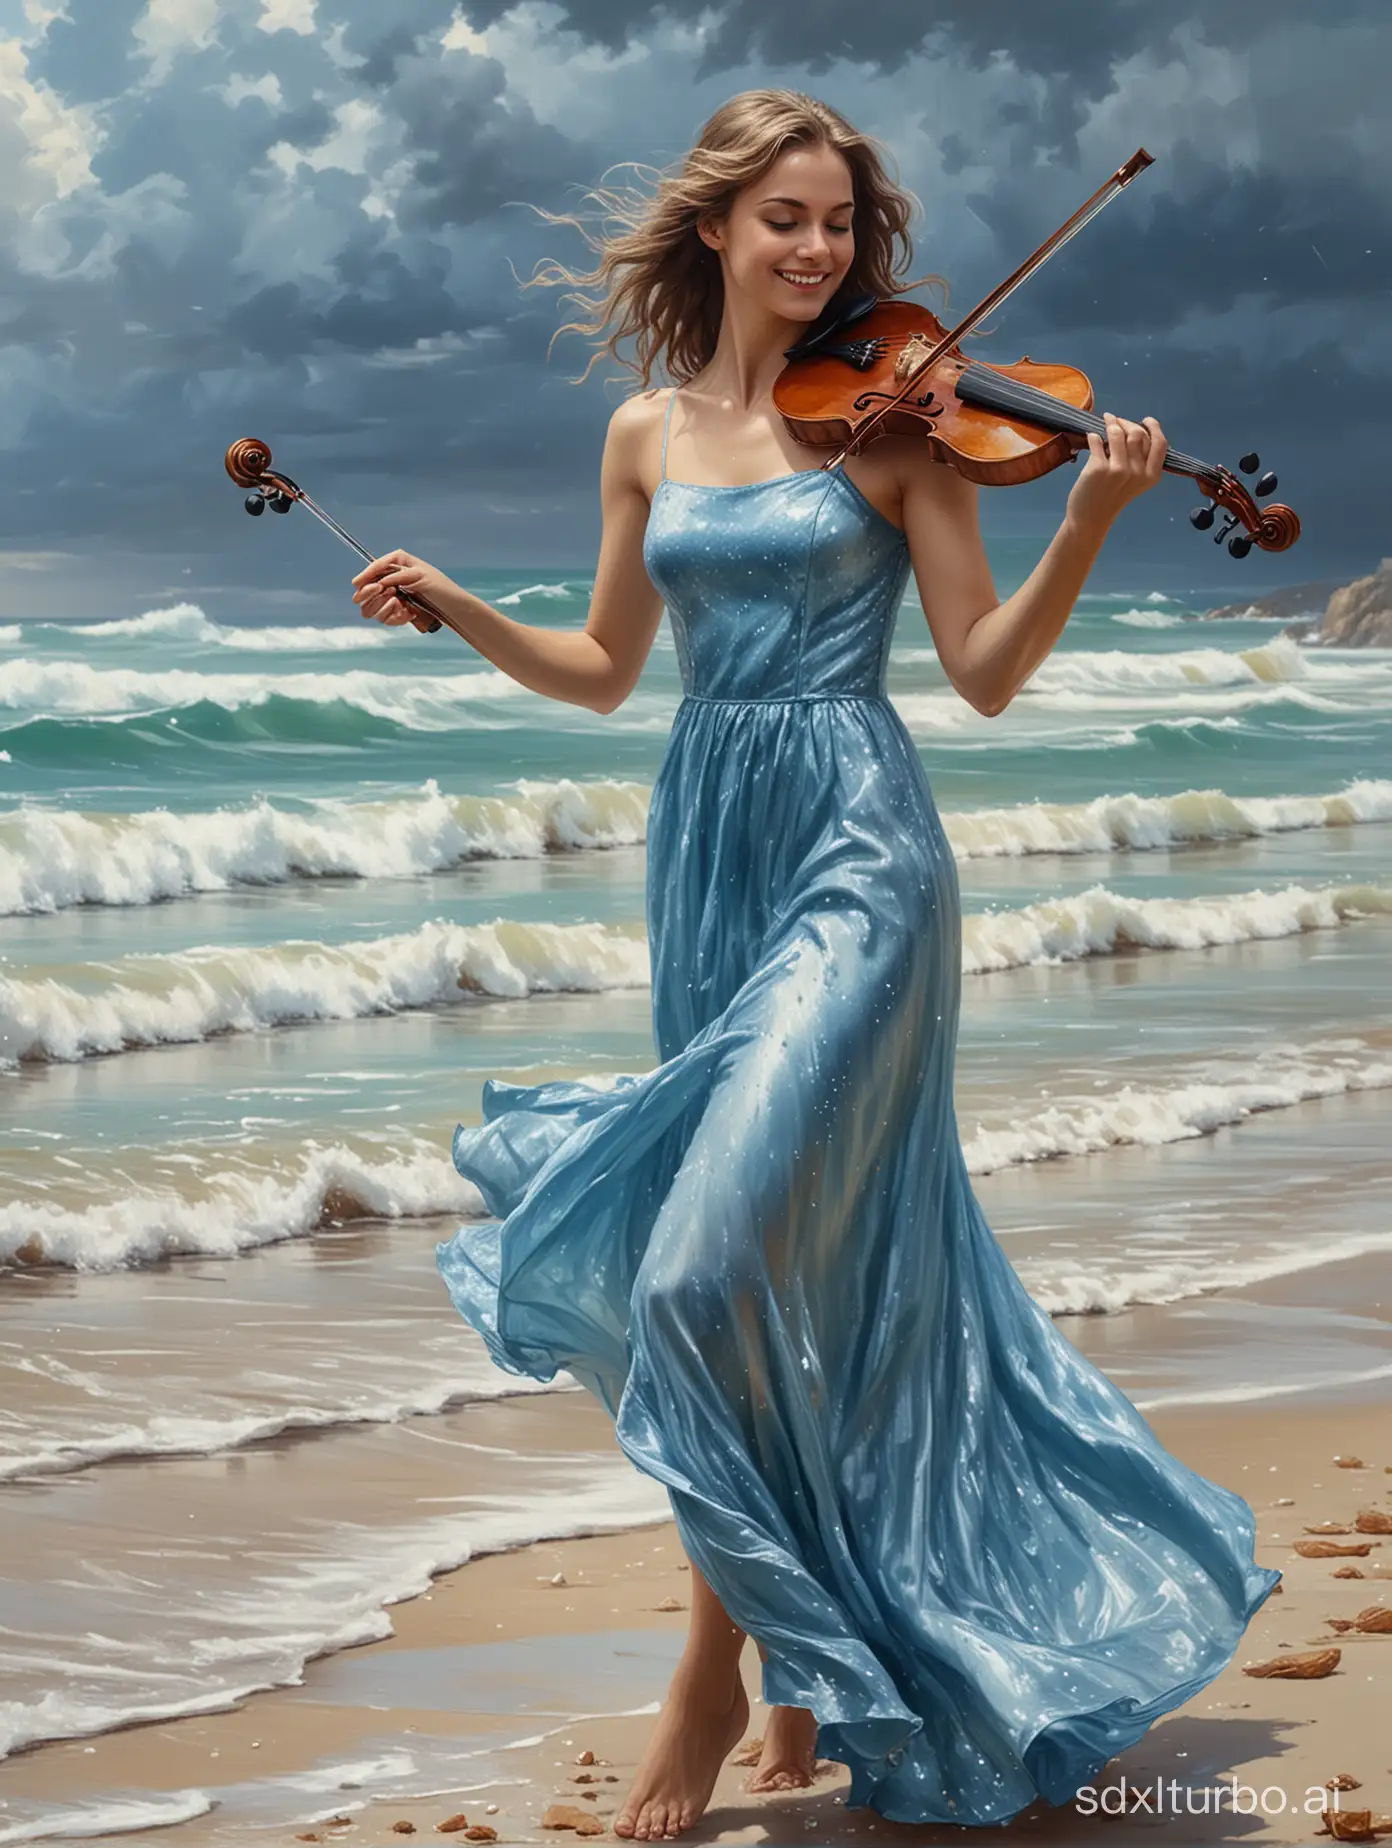 Elegant-Caucasian-Woman-Playing-Violin-on-Beach-in-Shimmery-Blue-Dress